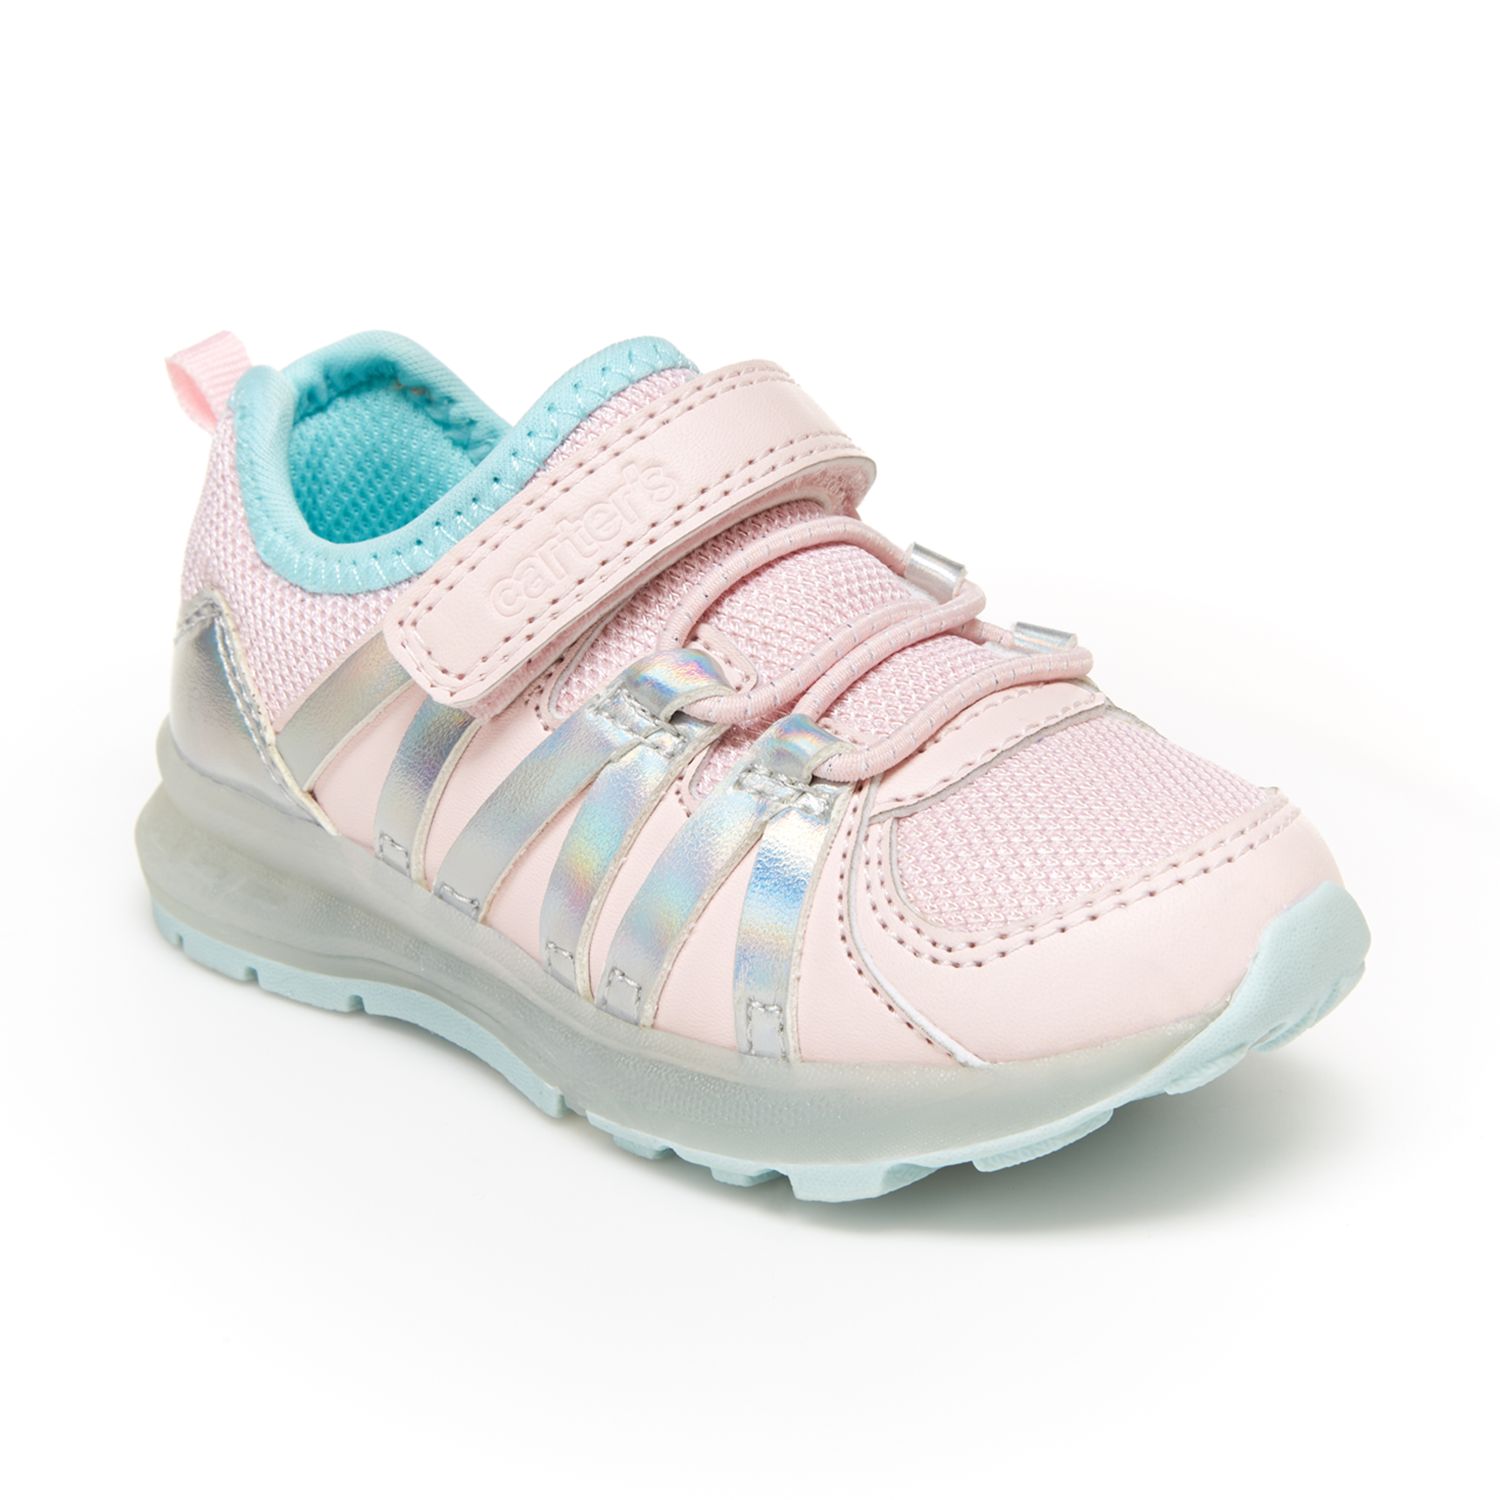 adidas toddler light up shoes